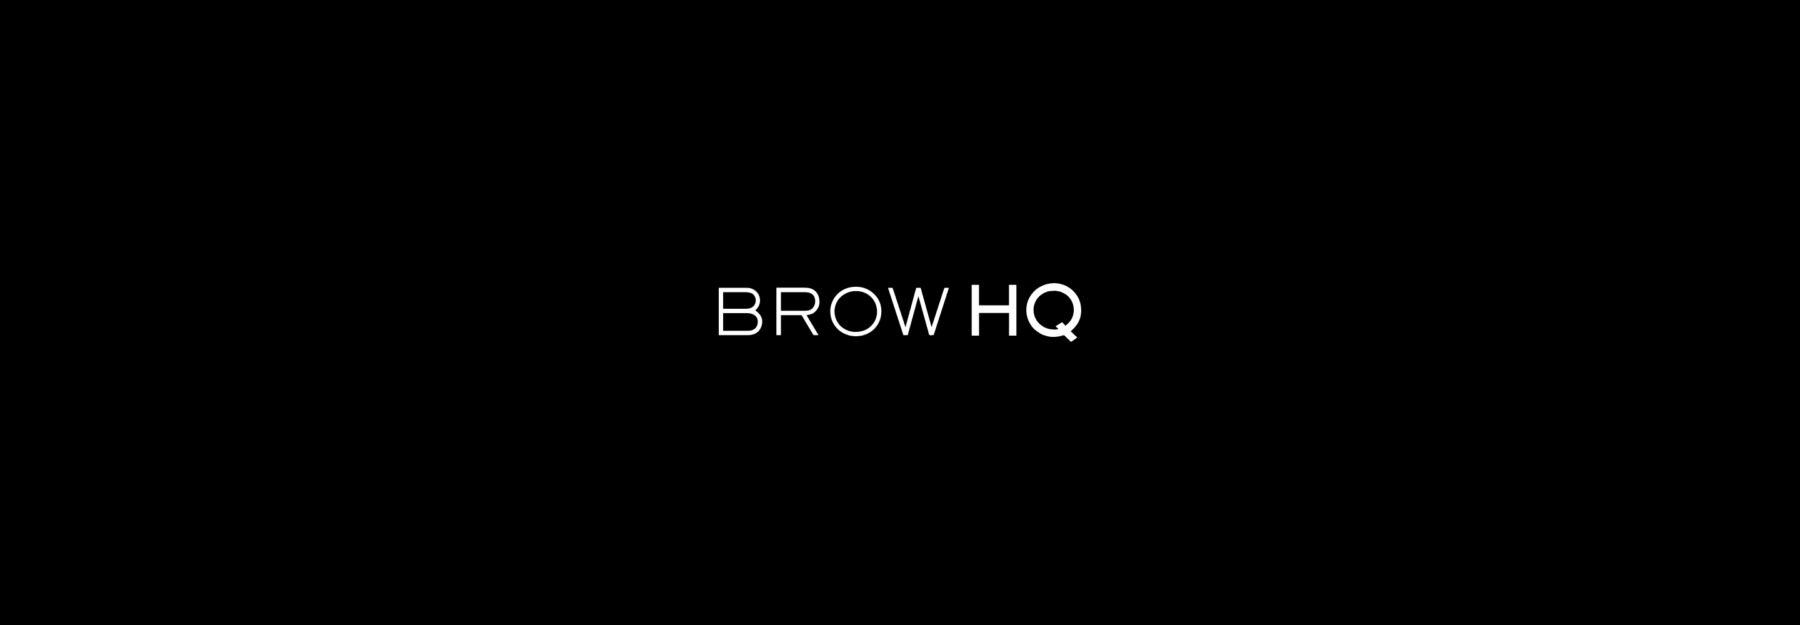 BrowHQ-logo